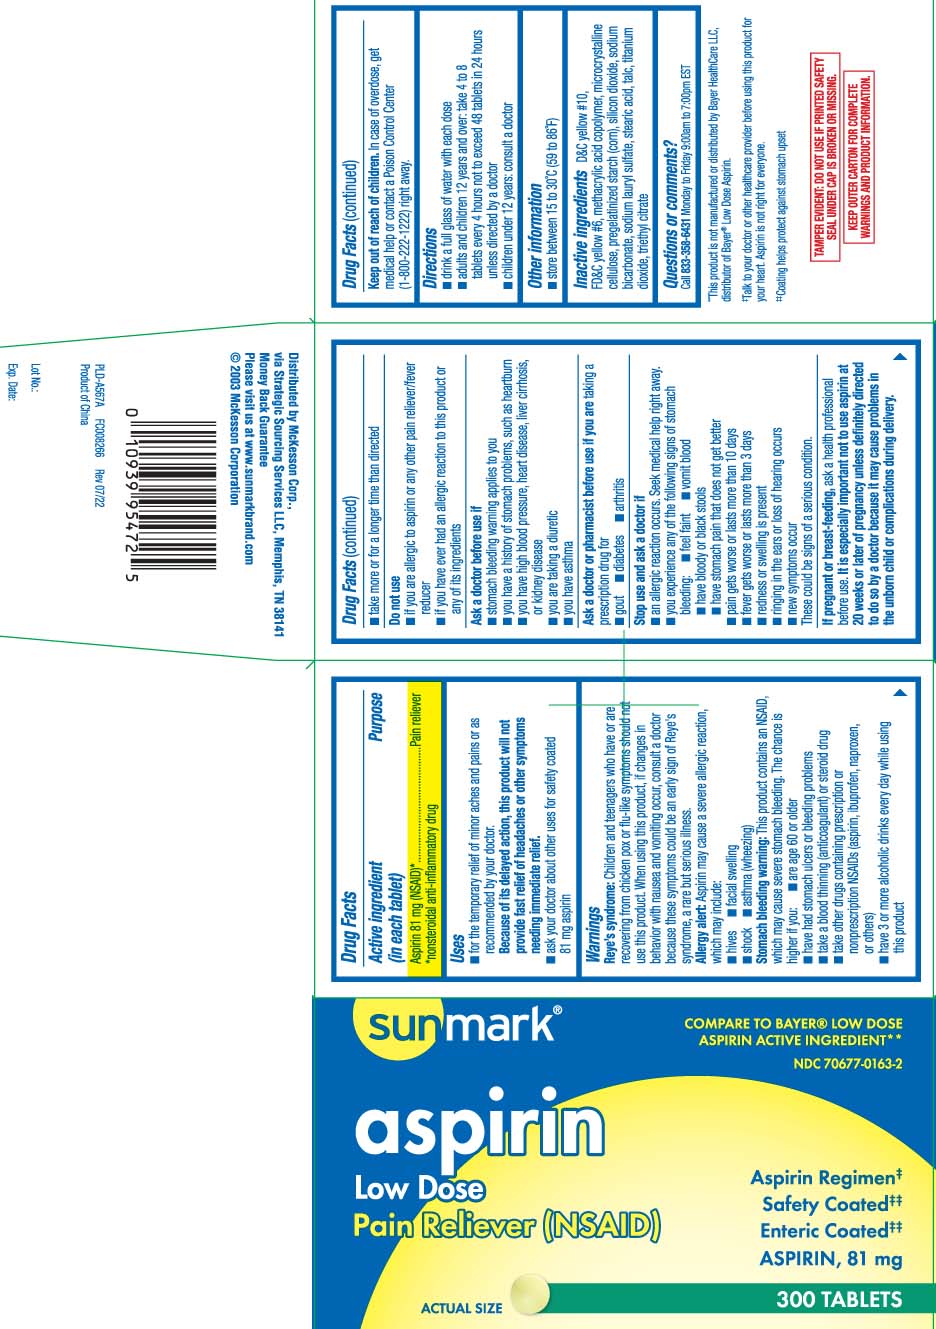 Aspirin 81 mg (NSAID)* nonsteroidal anti-inflammatory drug